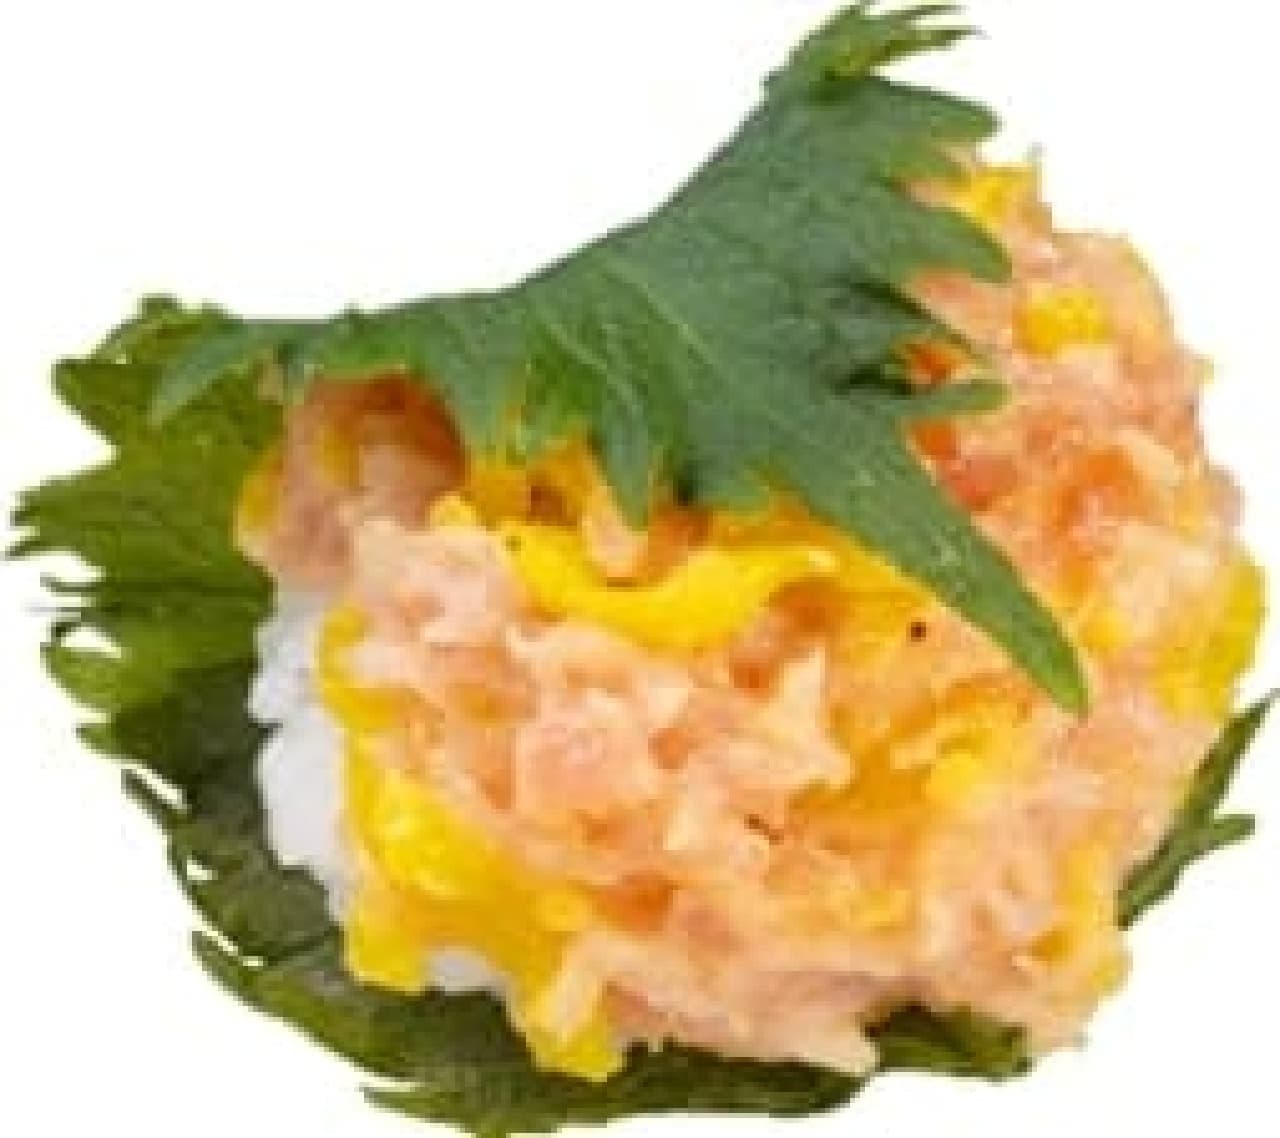 Kappa Sushi "Negitorotaku wrapped in shiso leaves